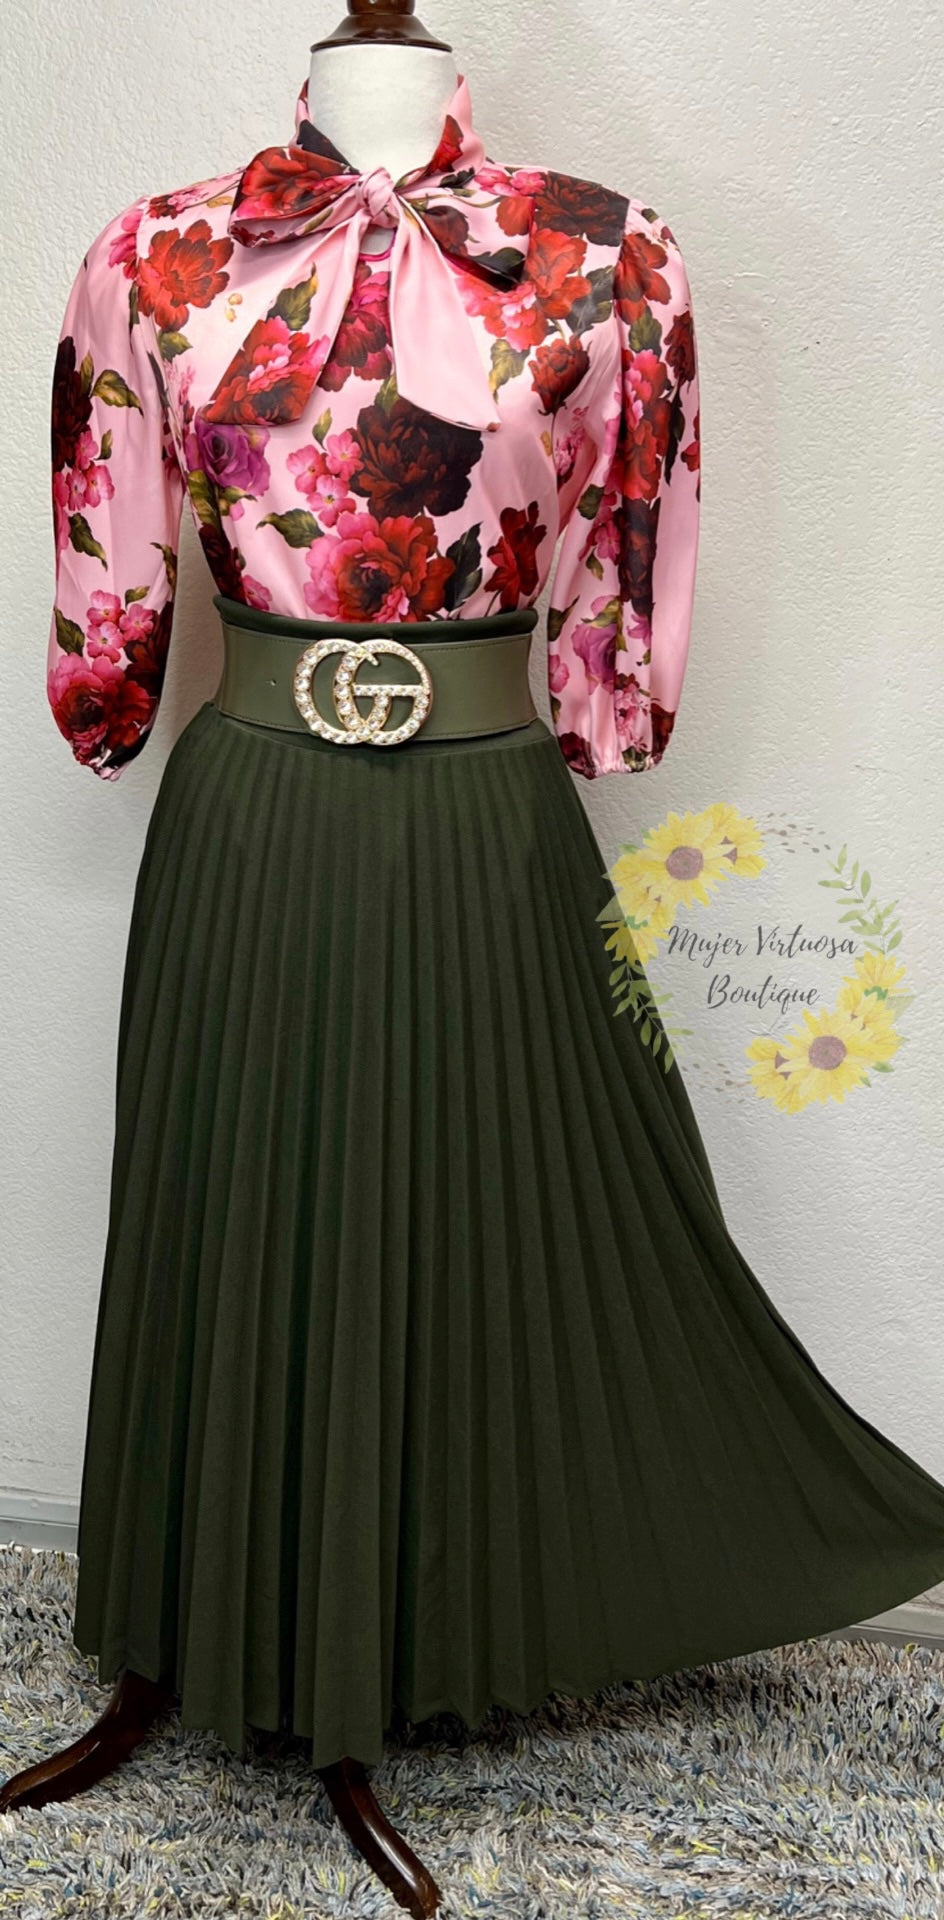 Falda Verde Olivo Plisada – Mujer Virtuosa Boutique